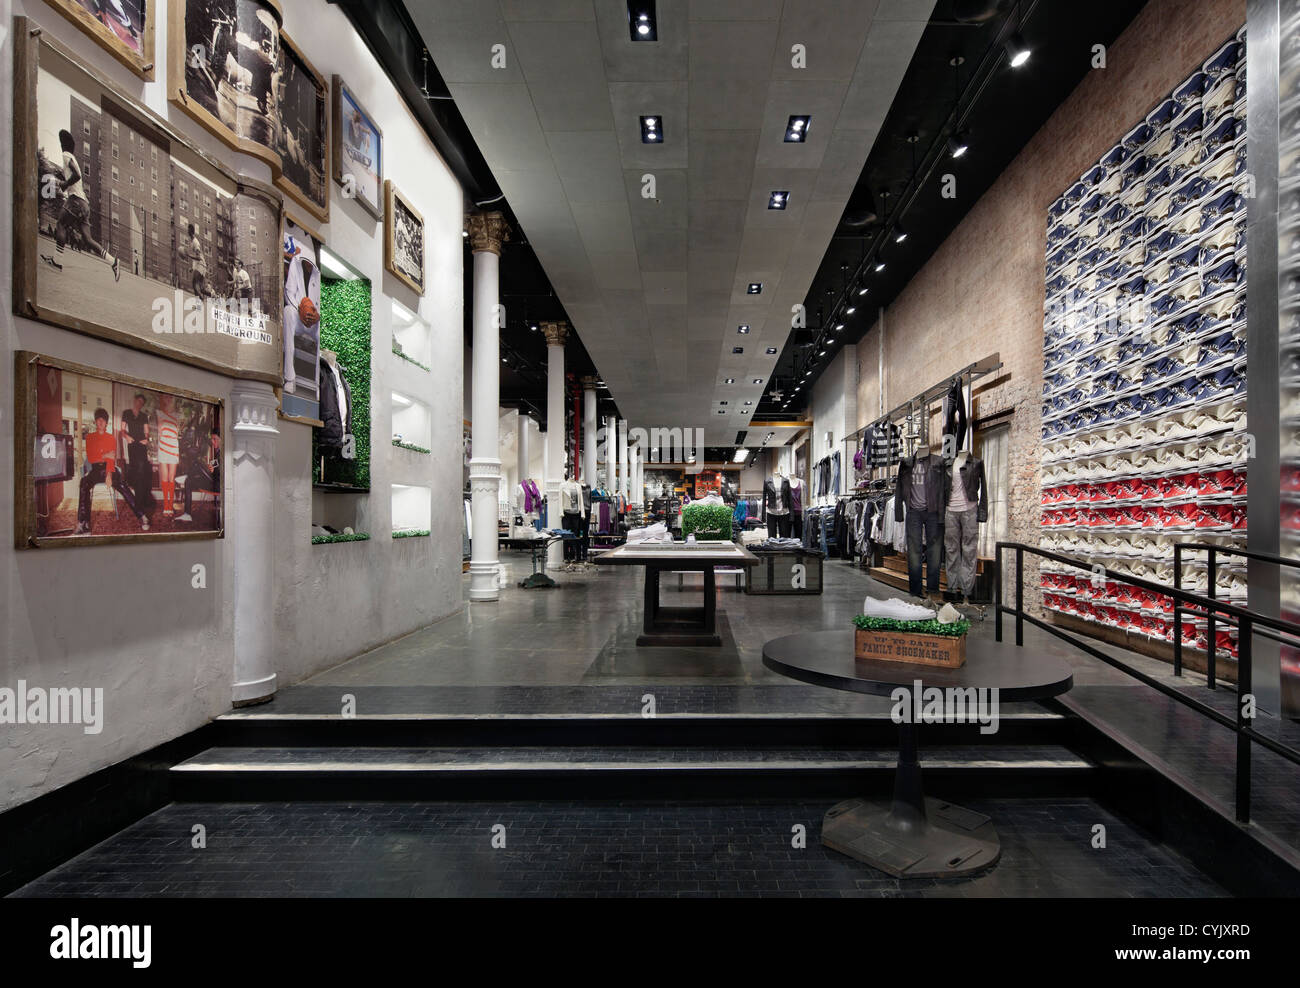 Flagship Store, Nueva York, Estados Unidos. Arquitecto: Jennifer Carpenter, 2011 Fotografía de stock Alamy